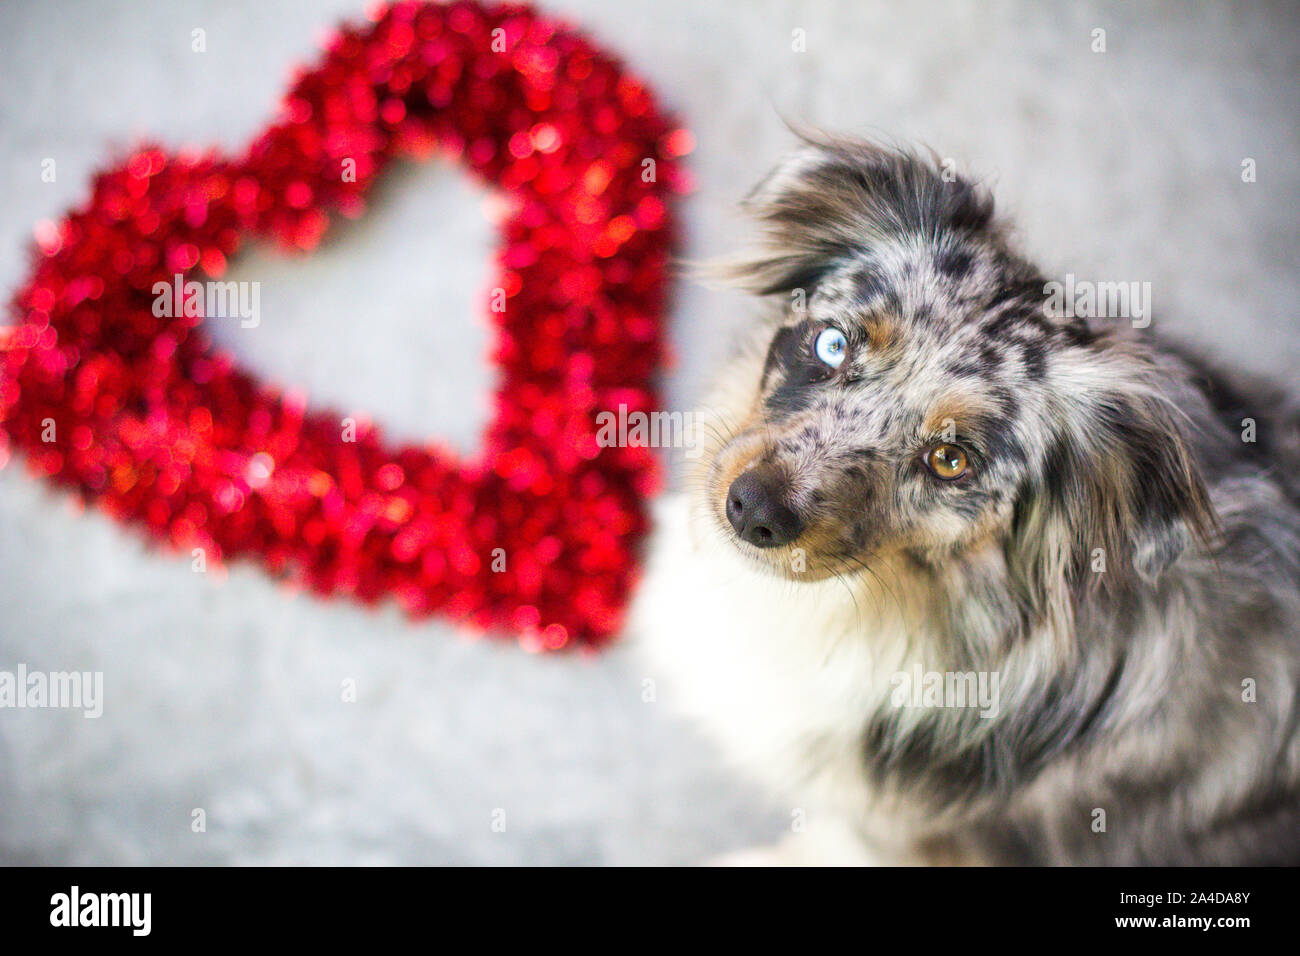 Blue merle miniature Australian shepherd dog next to a heart shape Valentine's decoration Stock Photo